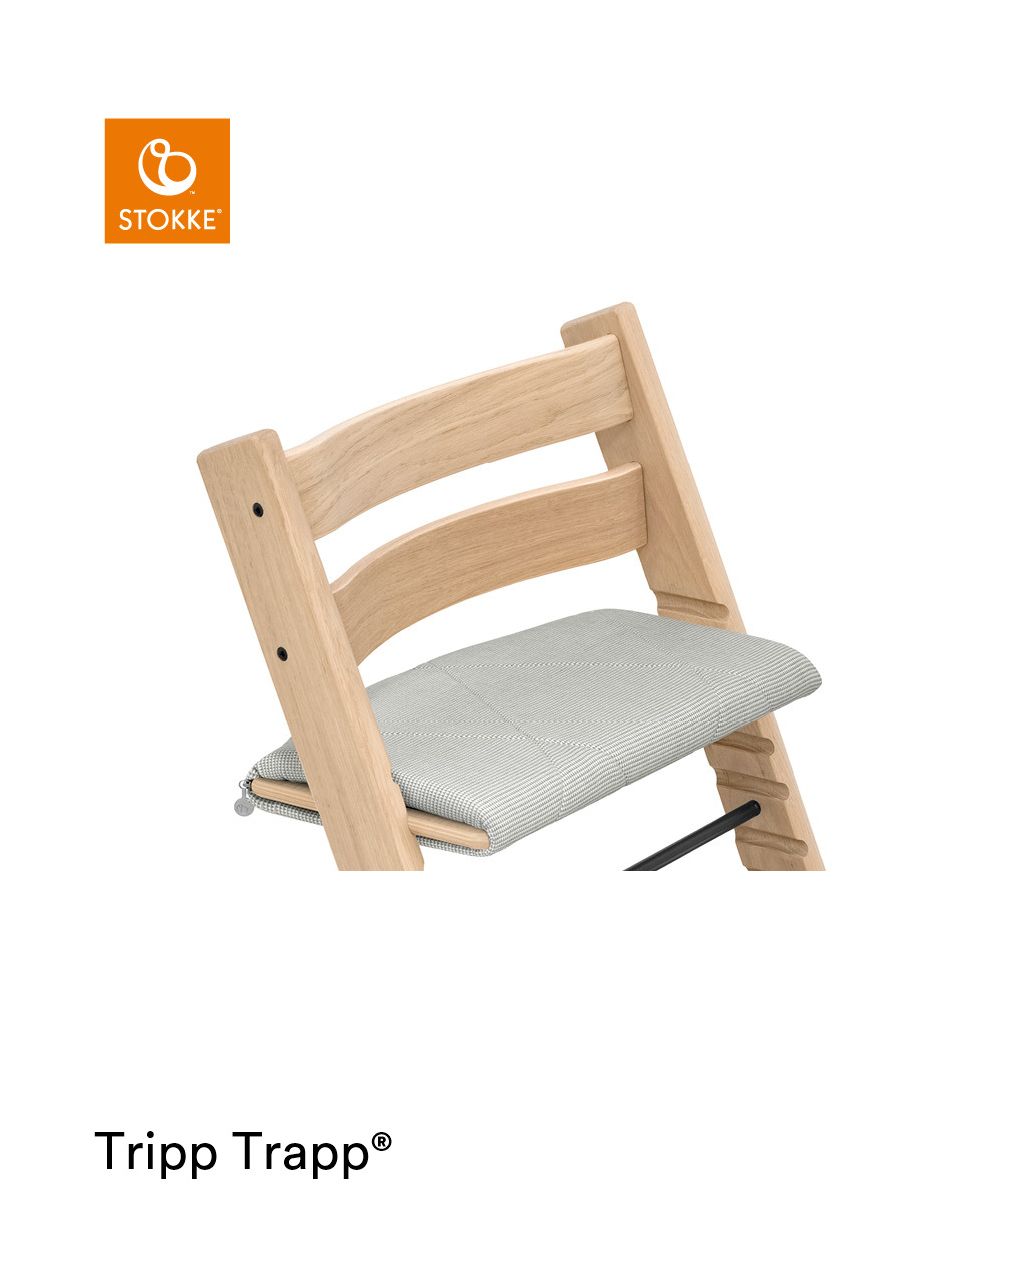 Tripp trapp® junior cushion - Stokke